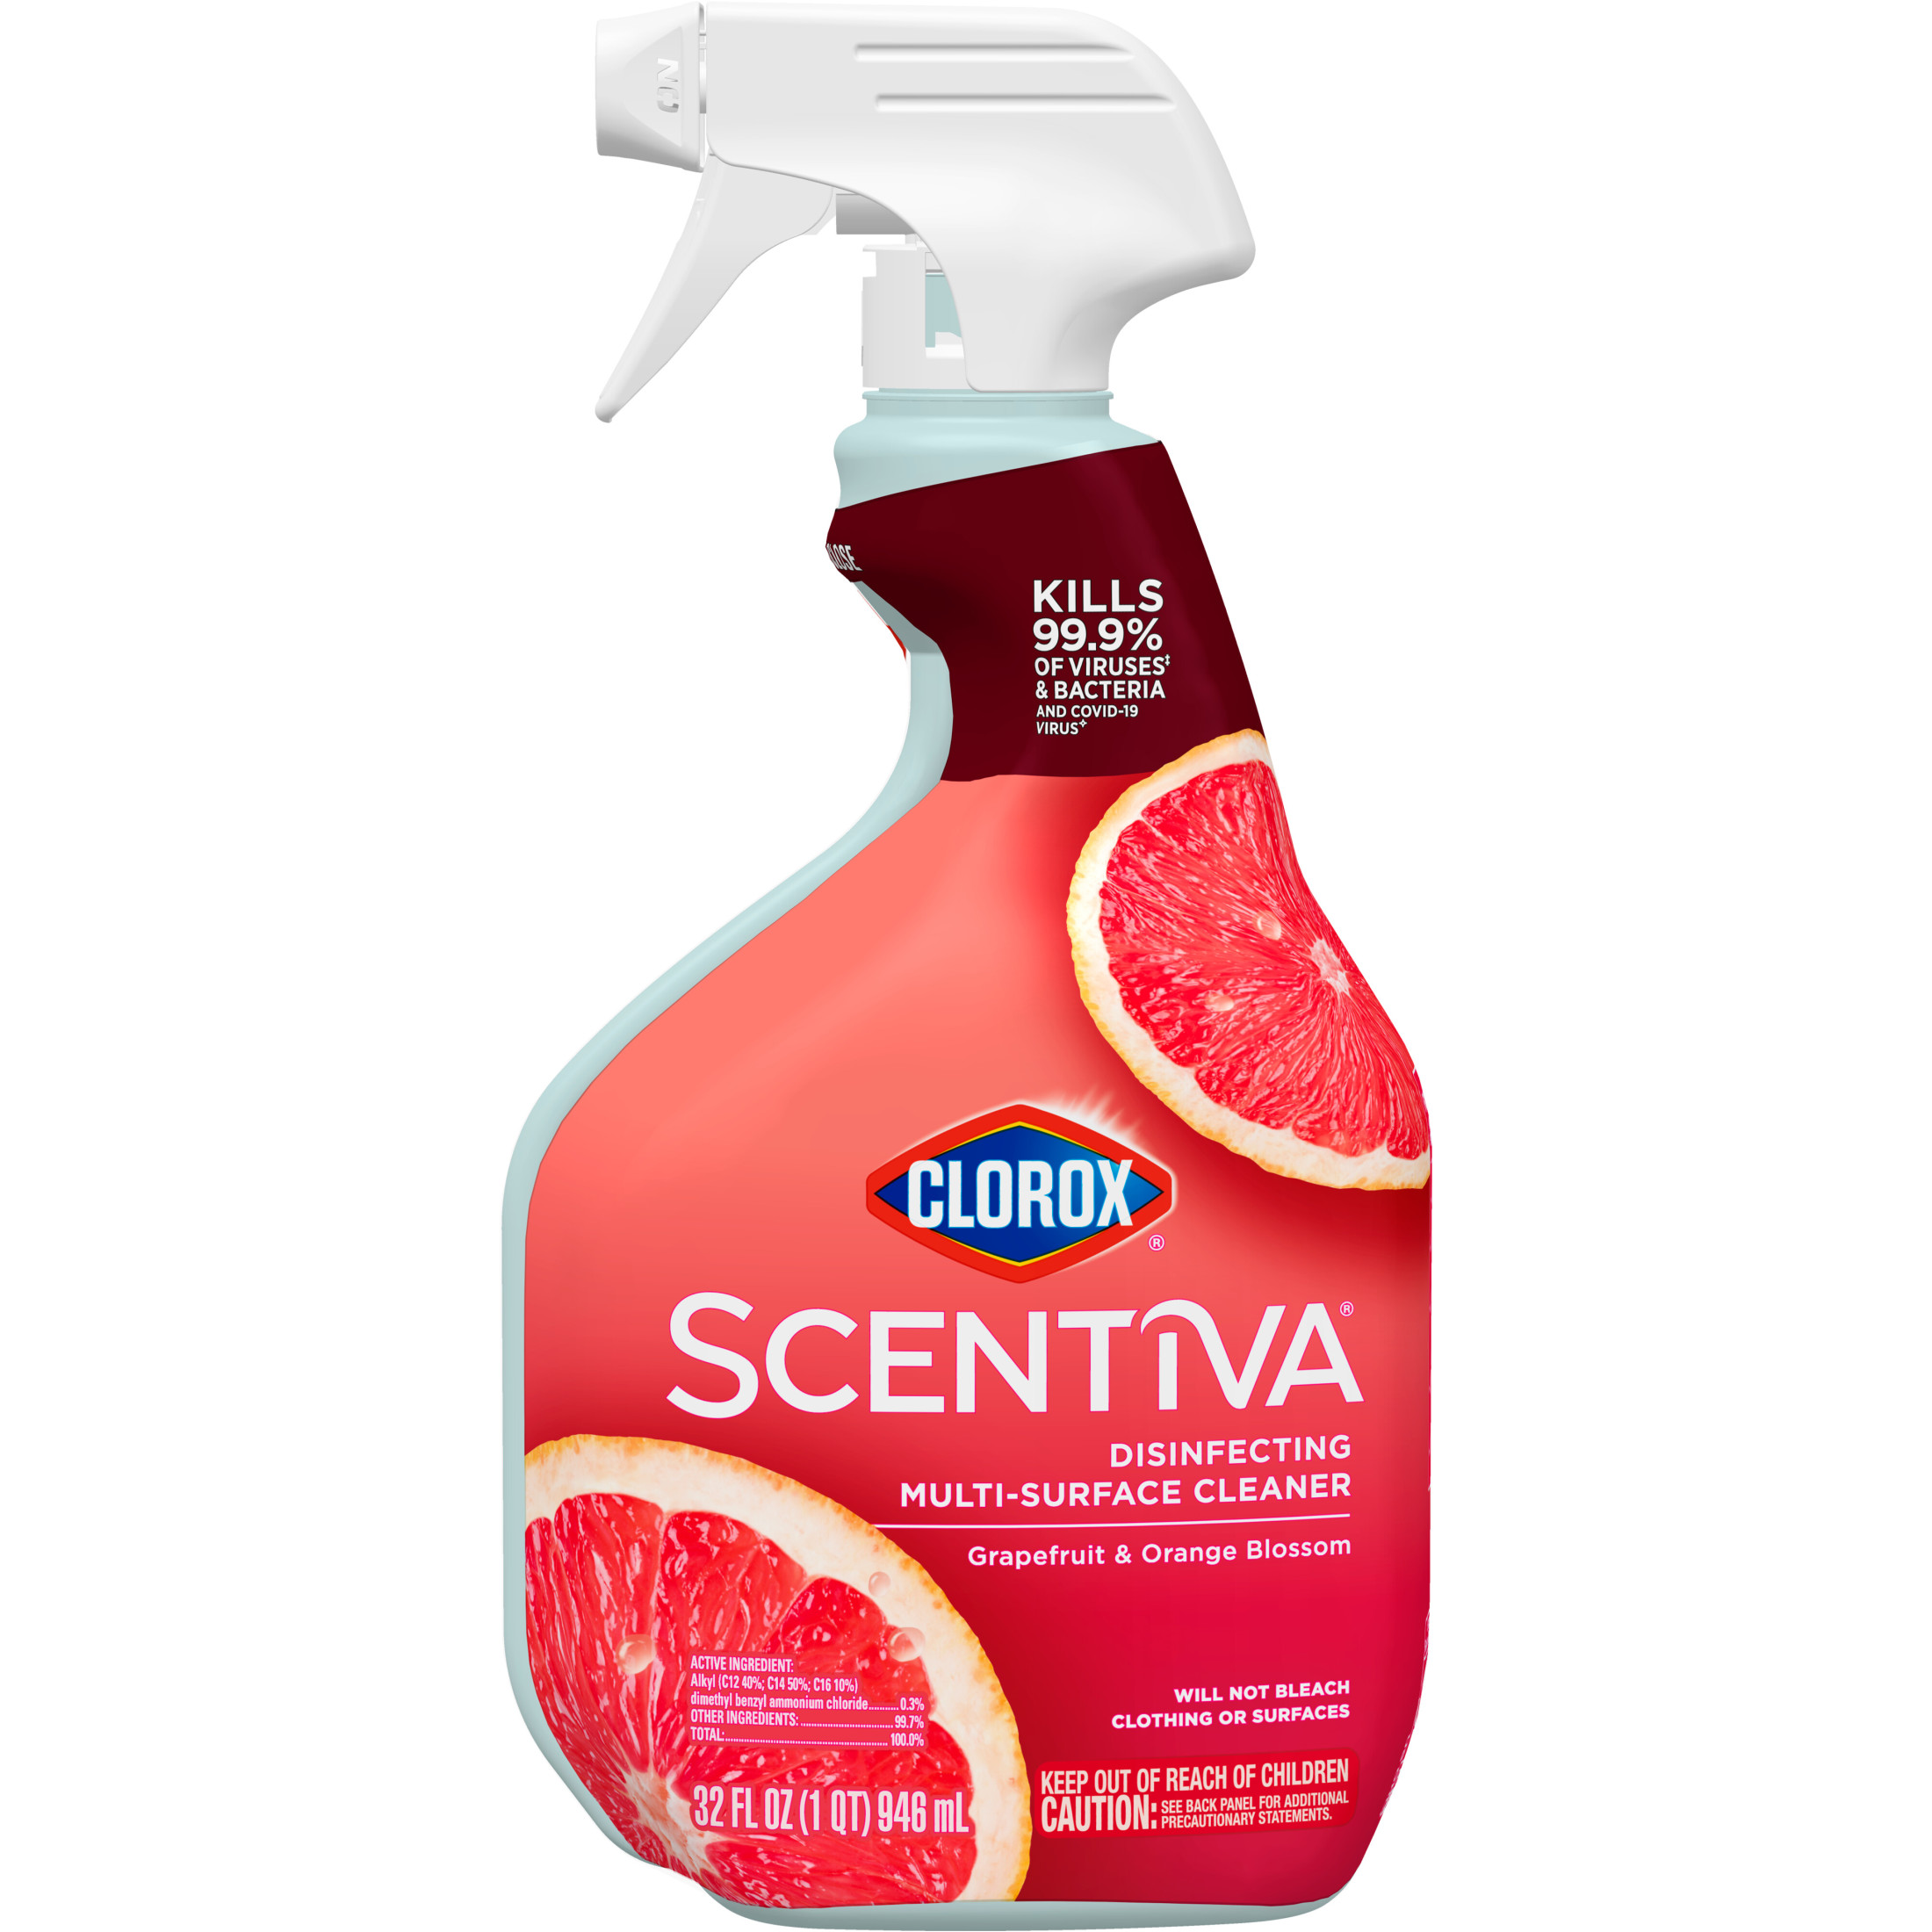 Clorox Scentiva Bleach-Free Multi-Surface Cleaner Spray, Grapefruit & Orange Blossom, 32 fl oz - image 2 of 10